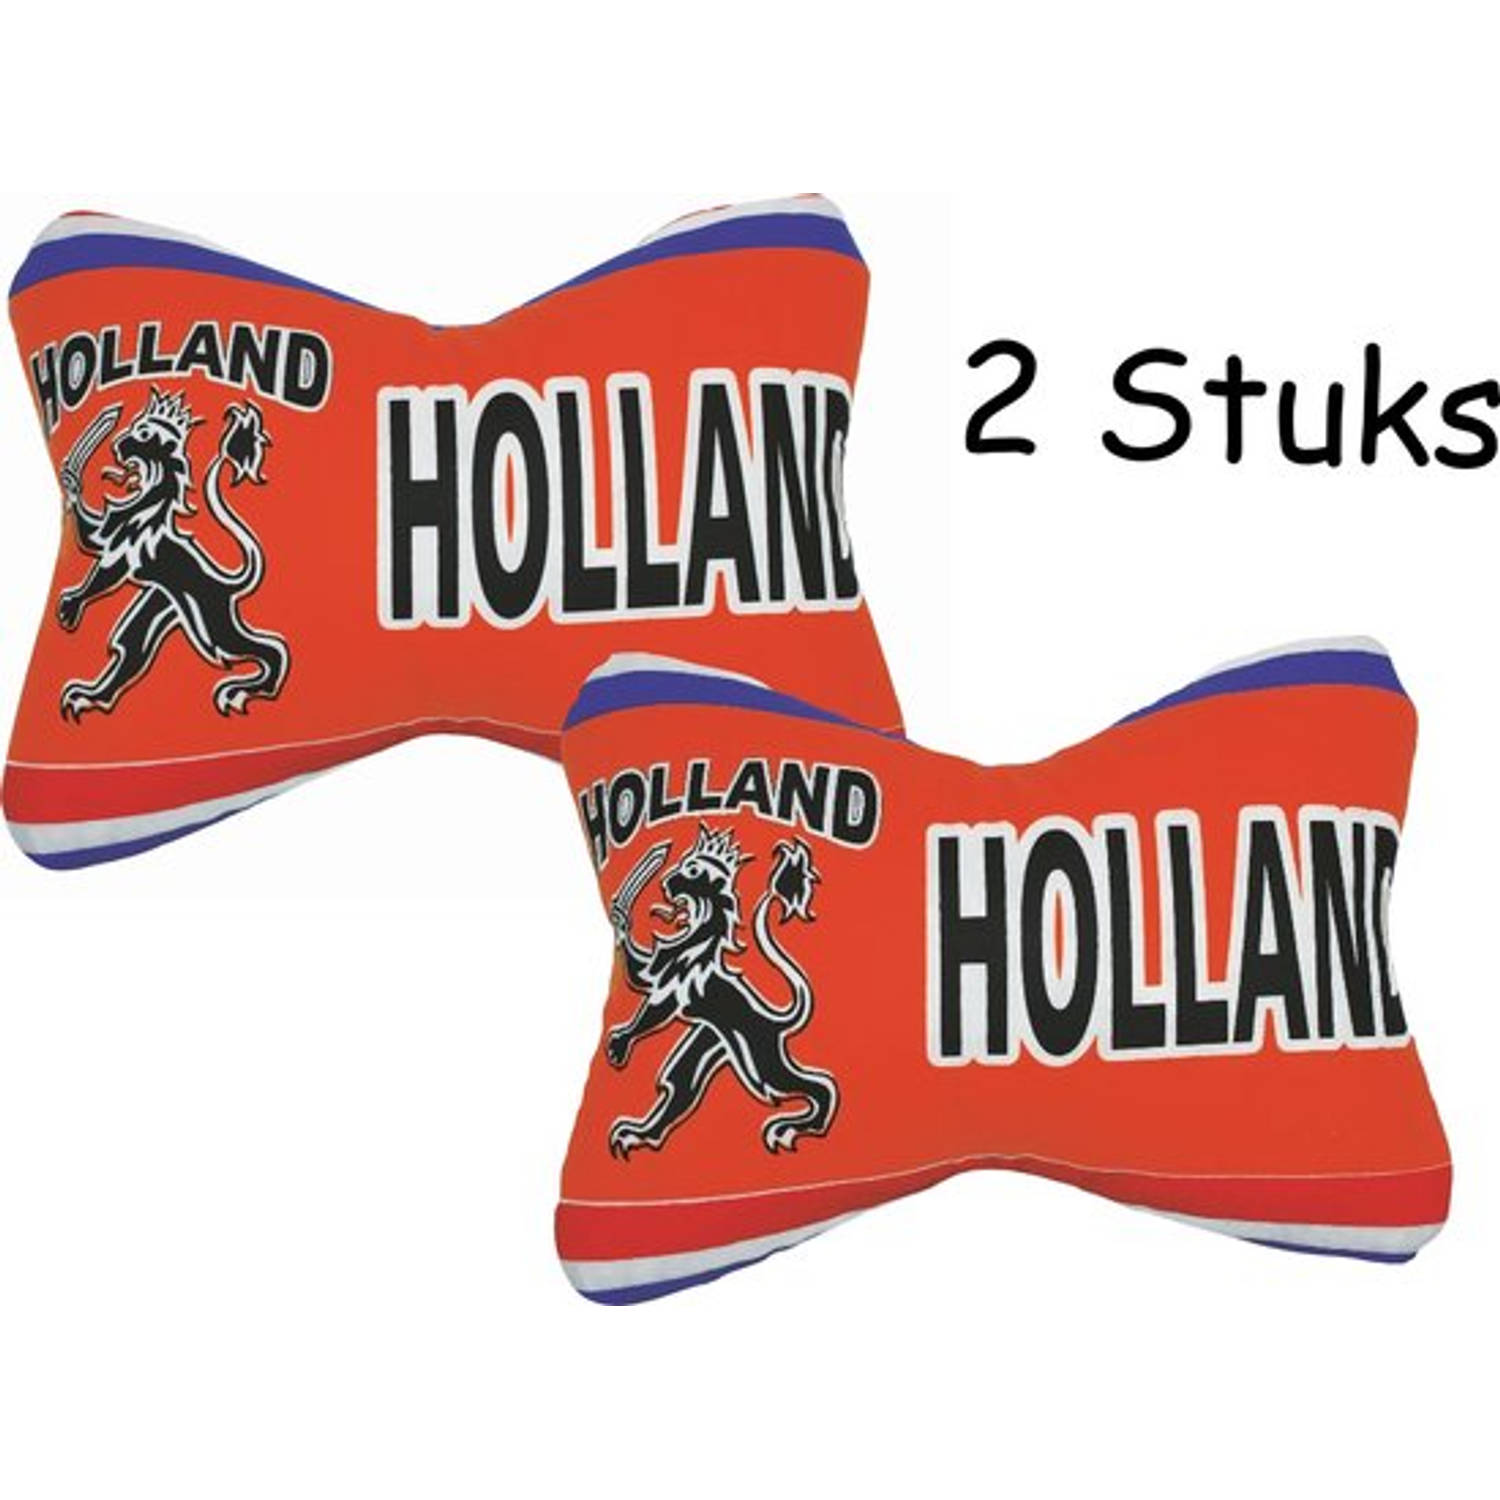 Nekkussen Holland & Leeuw Opdruk Ek-wk Oranje 17 X 24 Cm 2 Stuks